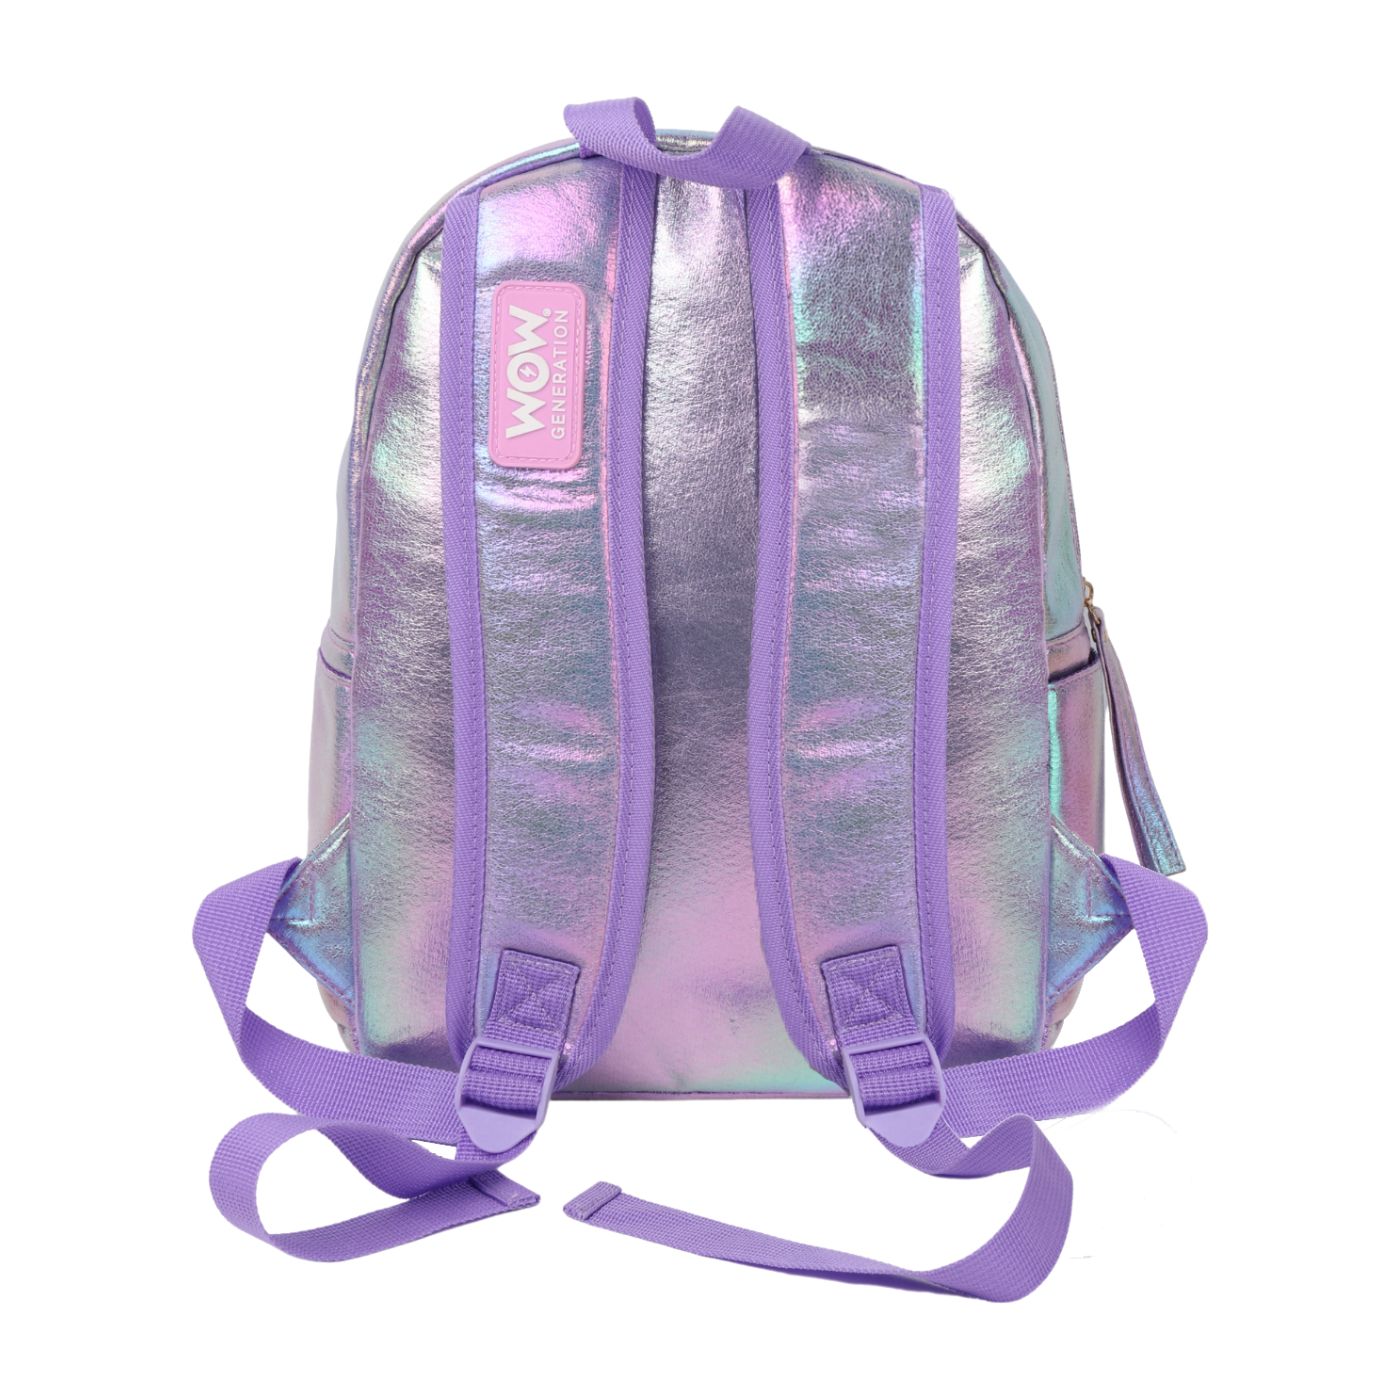 Stroll Backpack 32 CMS Iridescent Lila